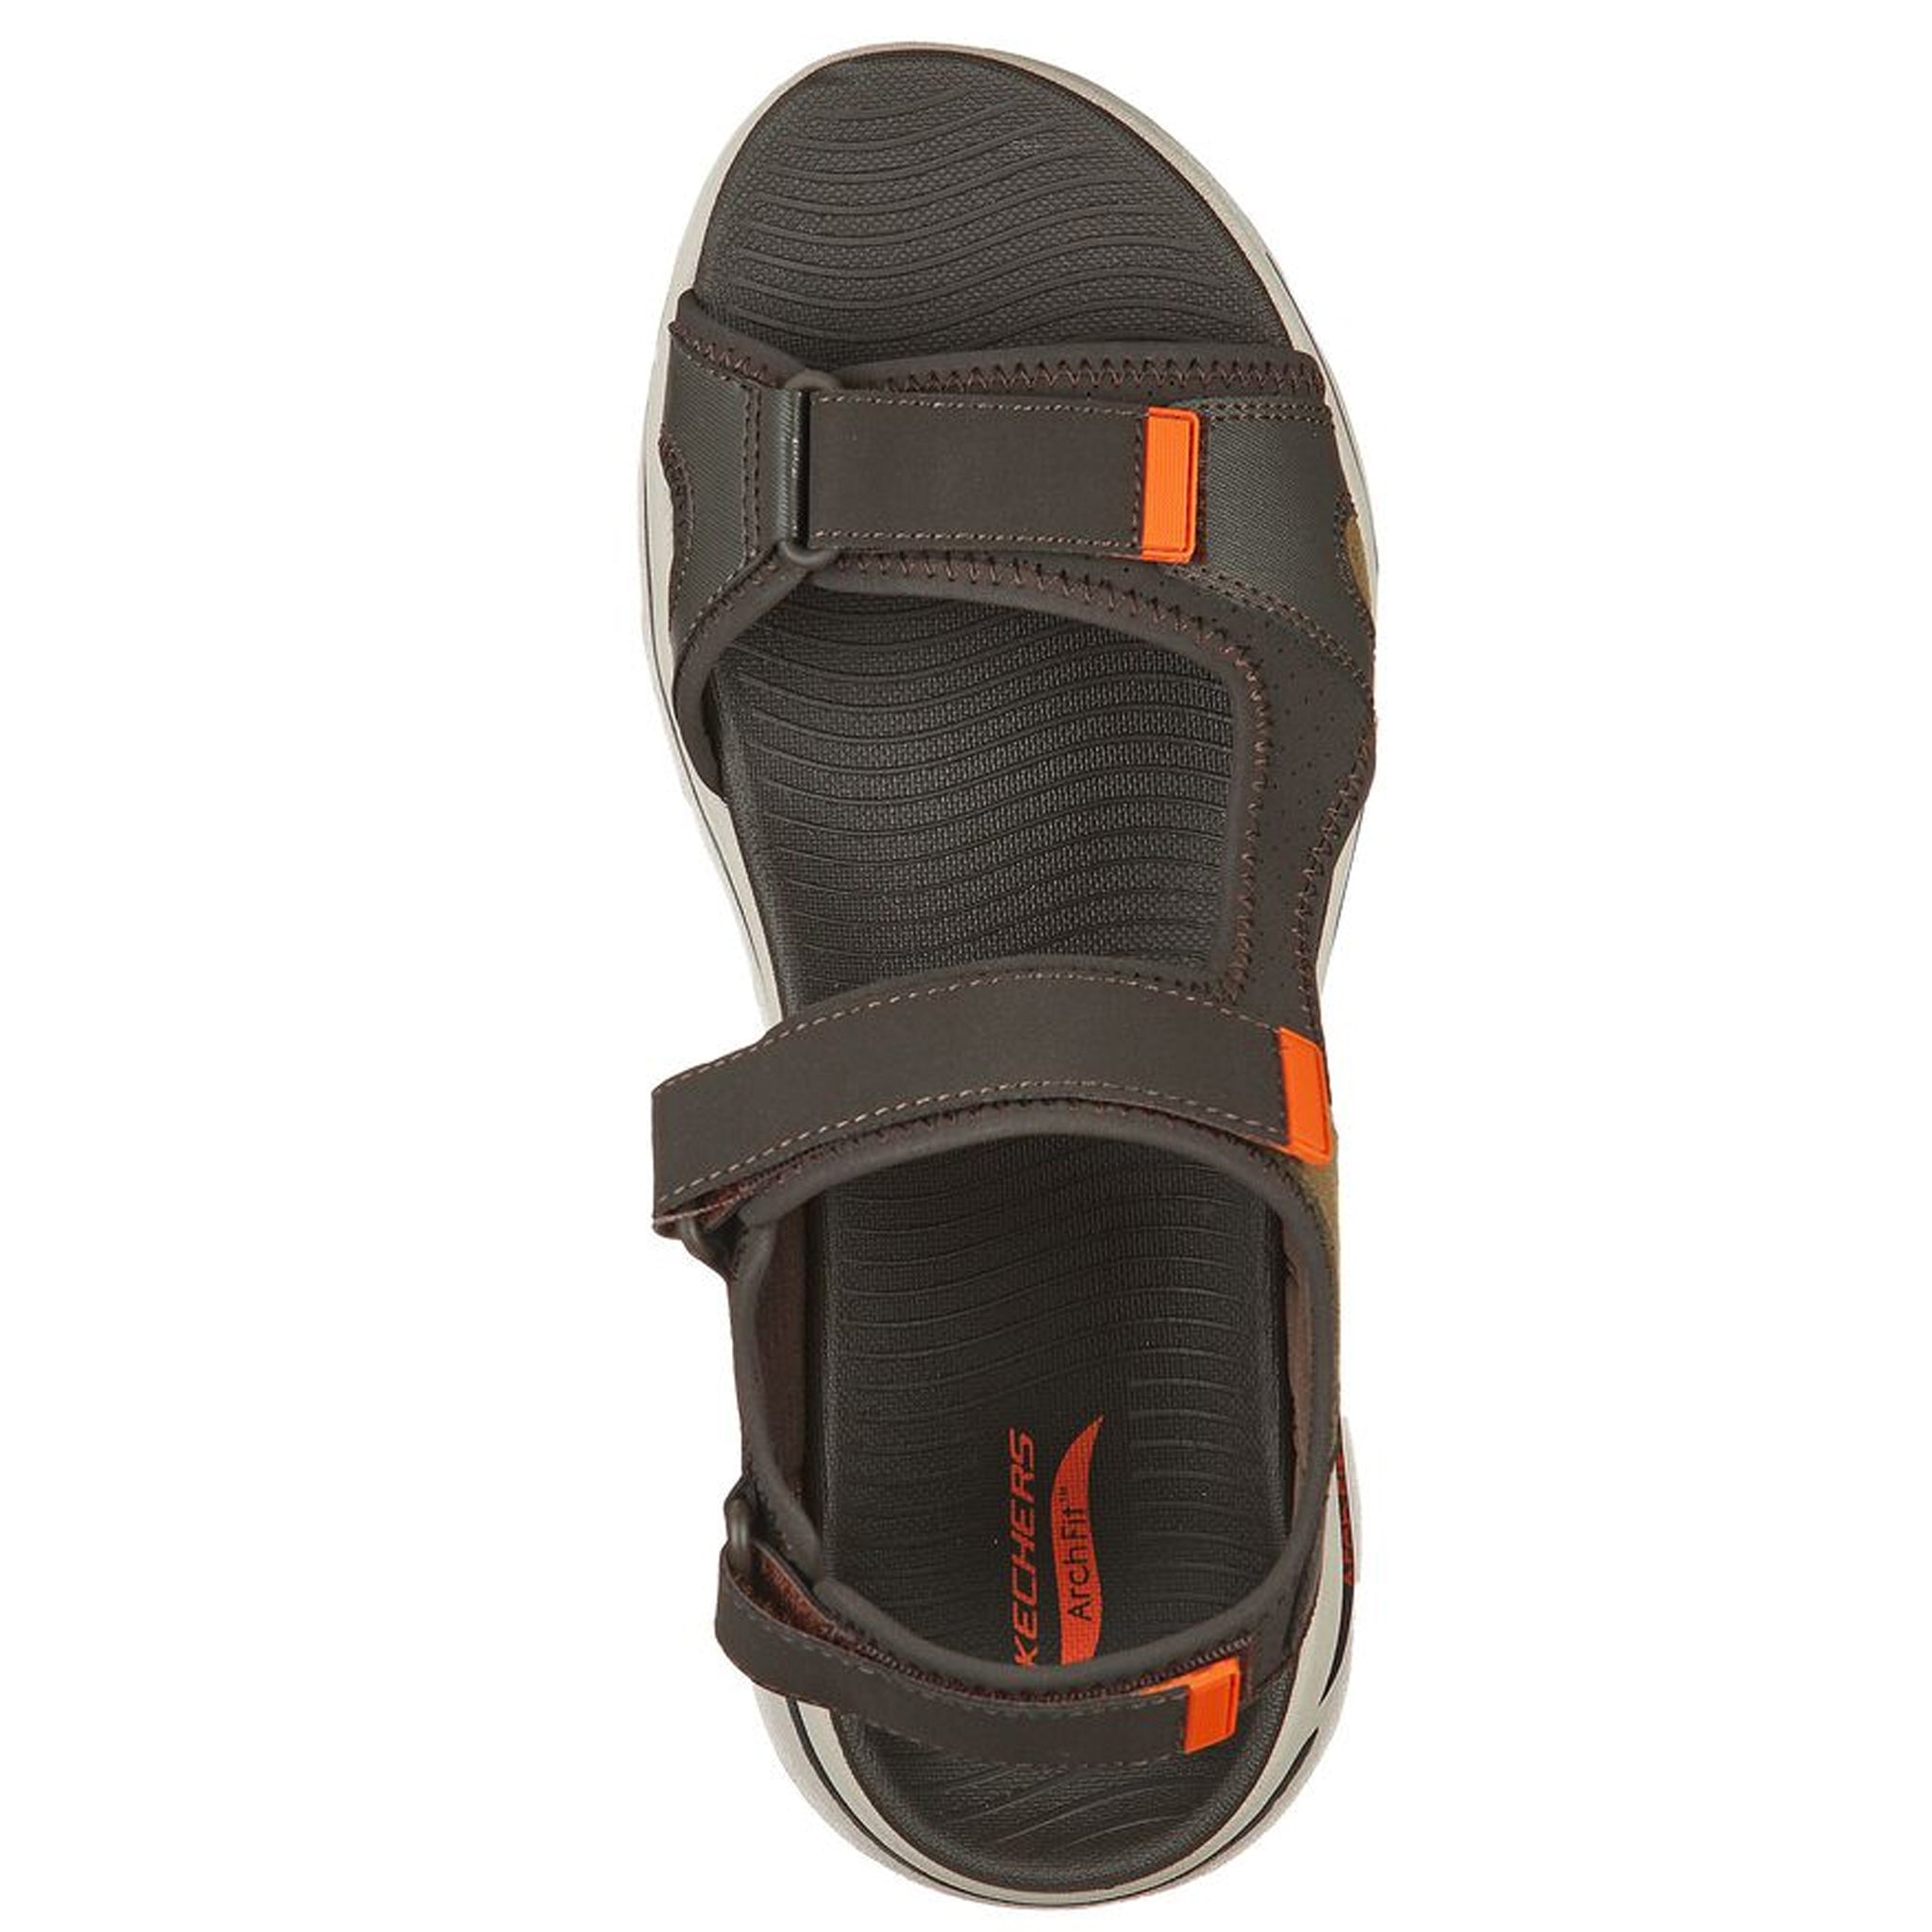 Skechers Men's 229021 Go Walk Fit Sandal Mission Strap Sandals – That Shoe Store and More